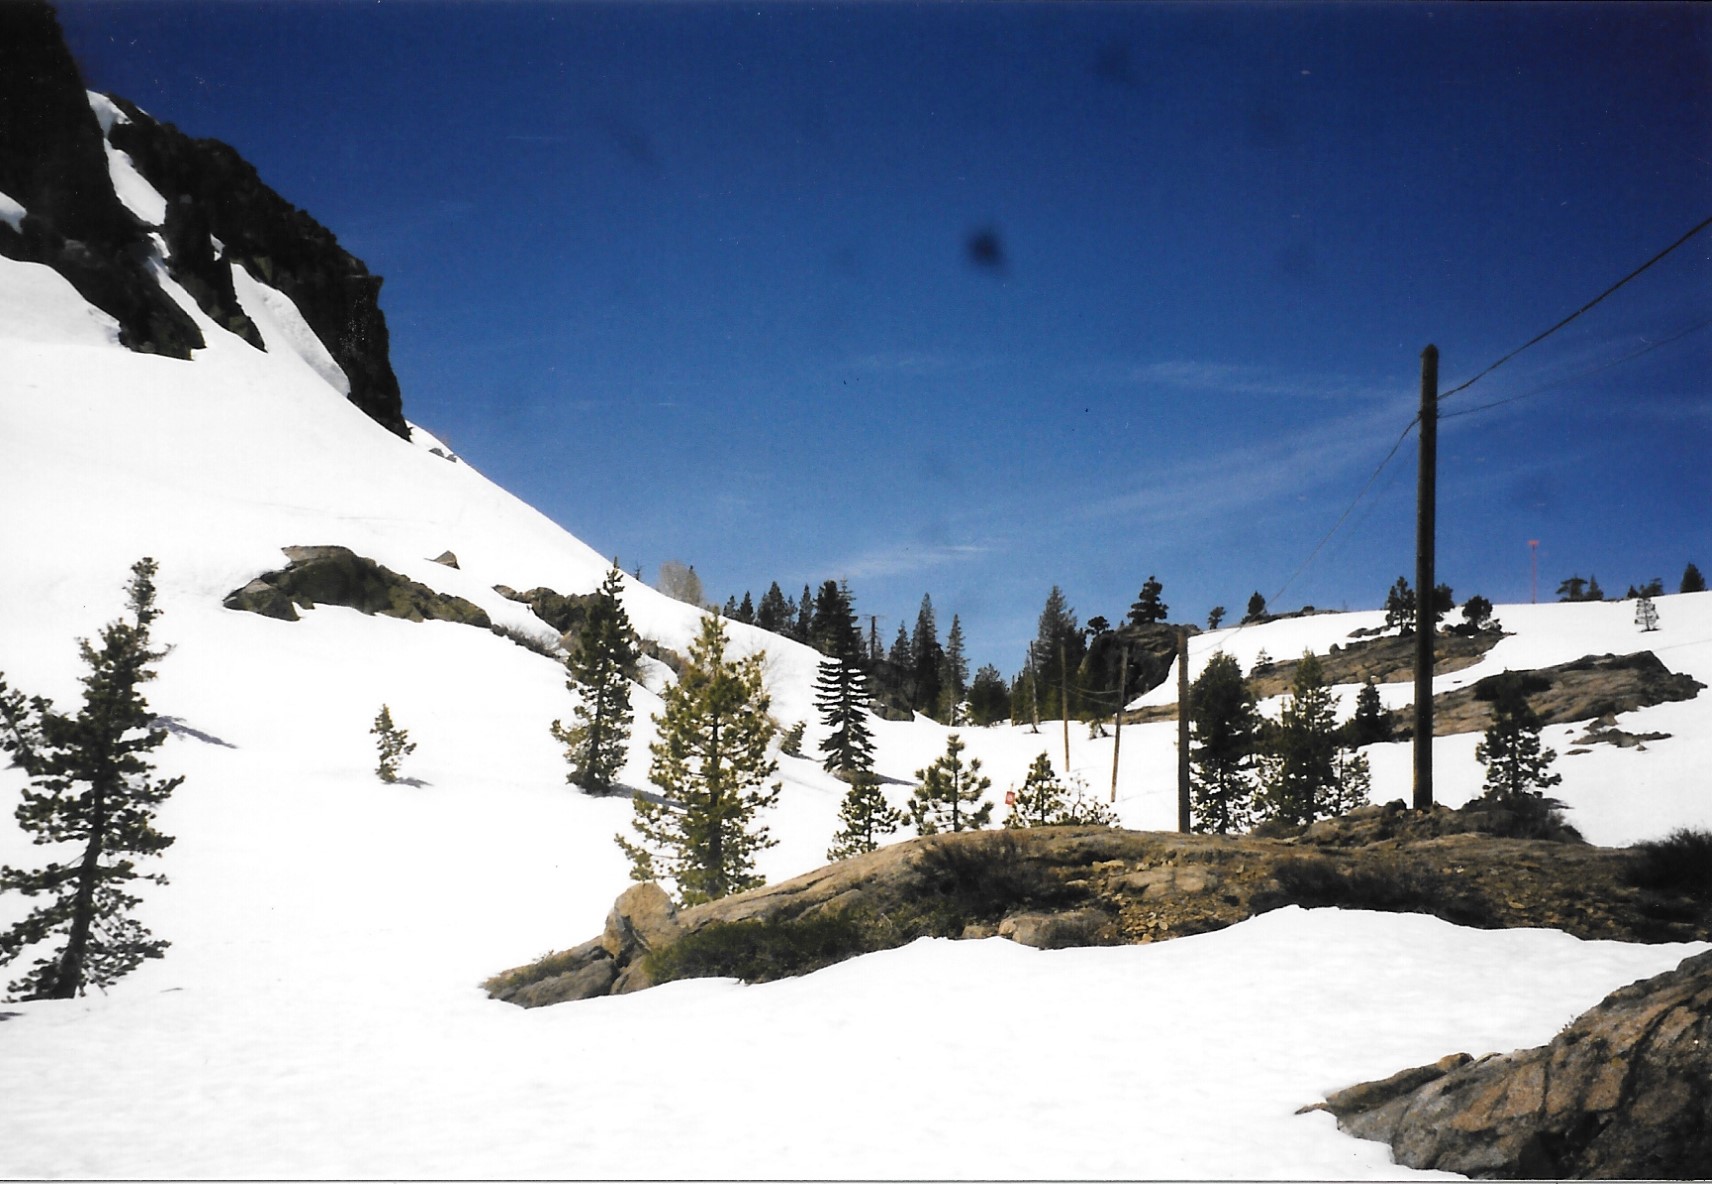 Photograph of Donner Pass